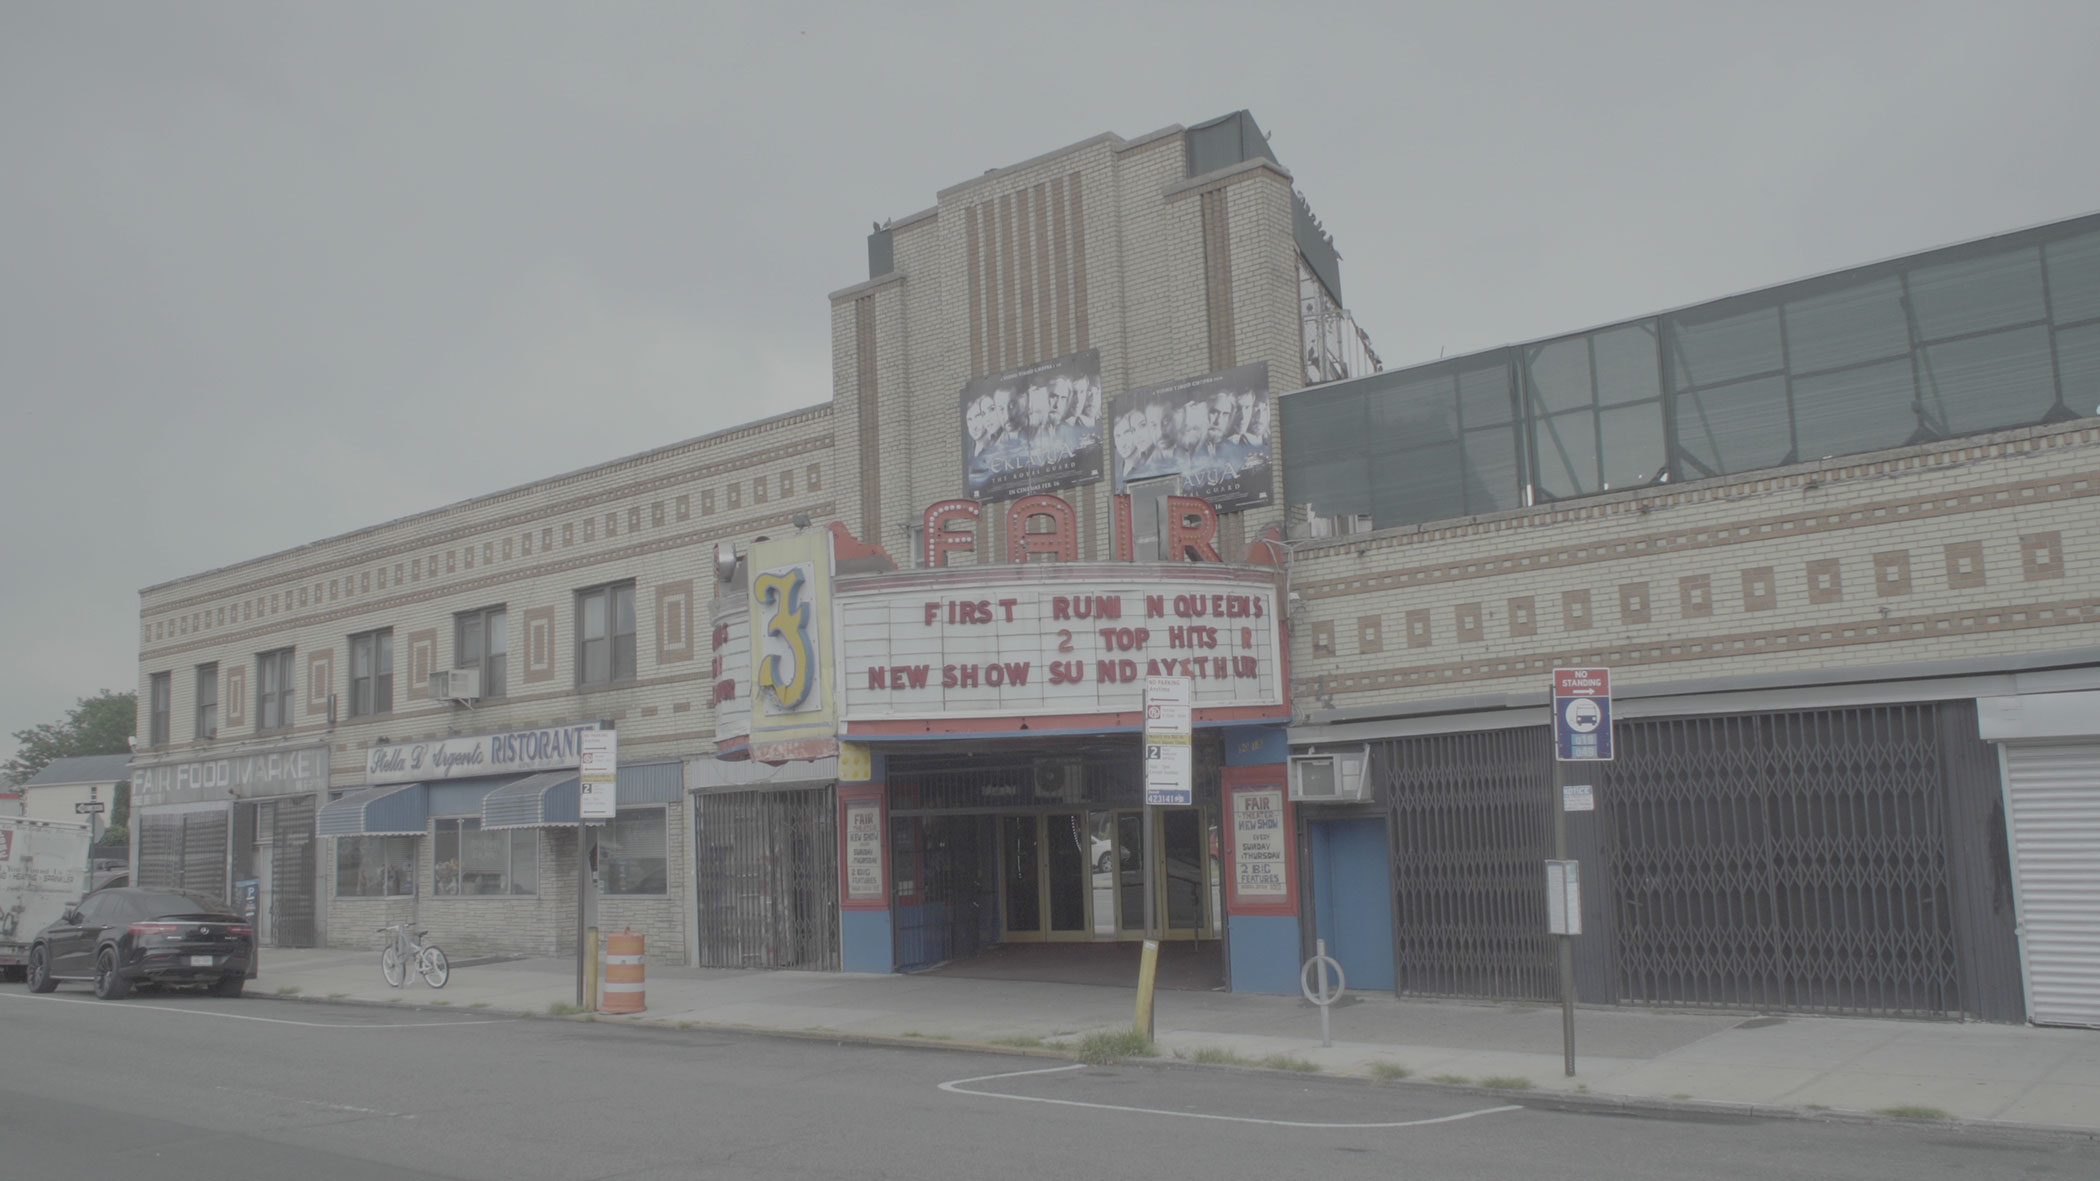 documentary still depicting a rundown movie theater